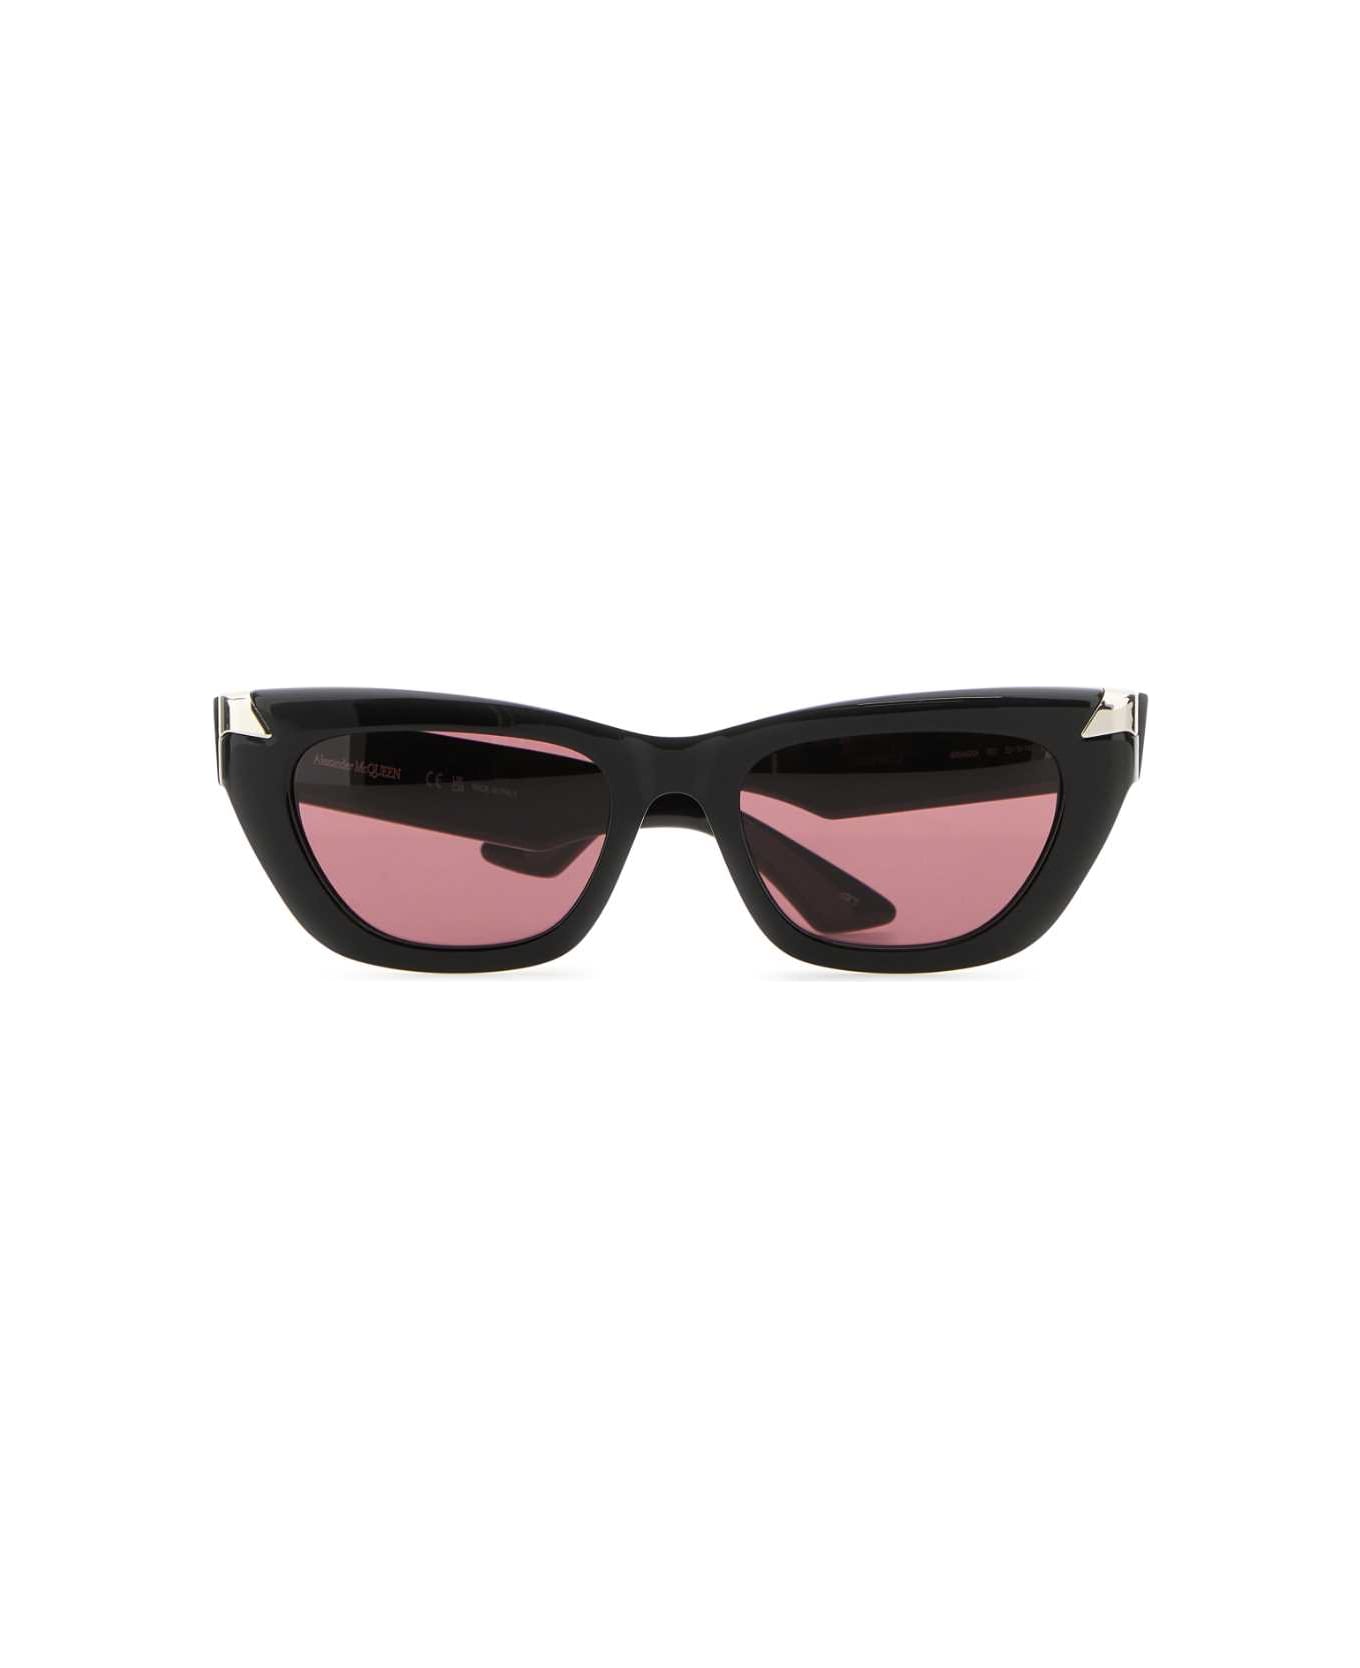 Alexander McQueen Black Acetate Punk Rivet Sunglasses - BLACKBLACKVIOLET